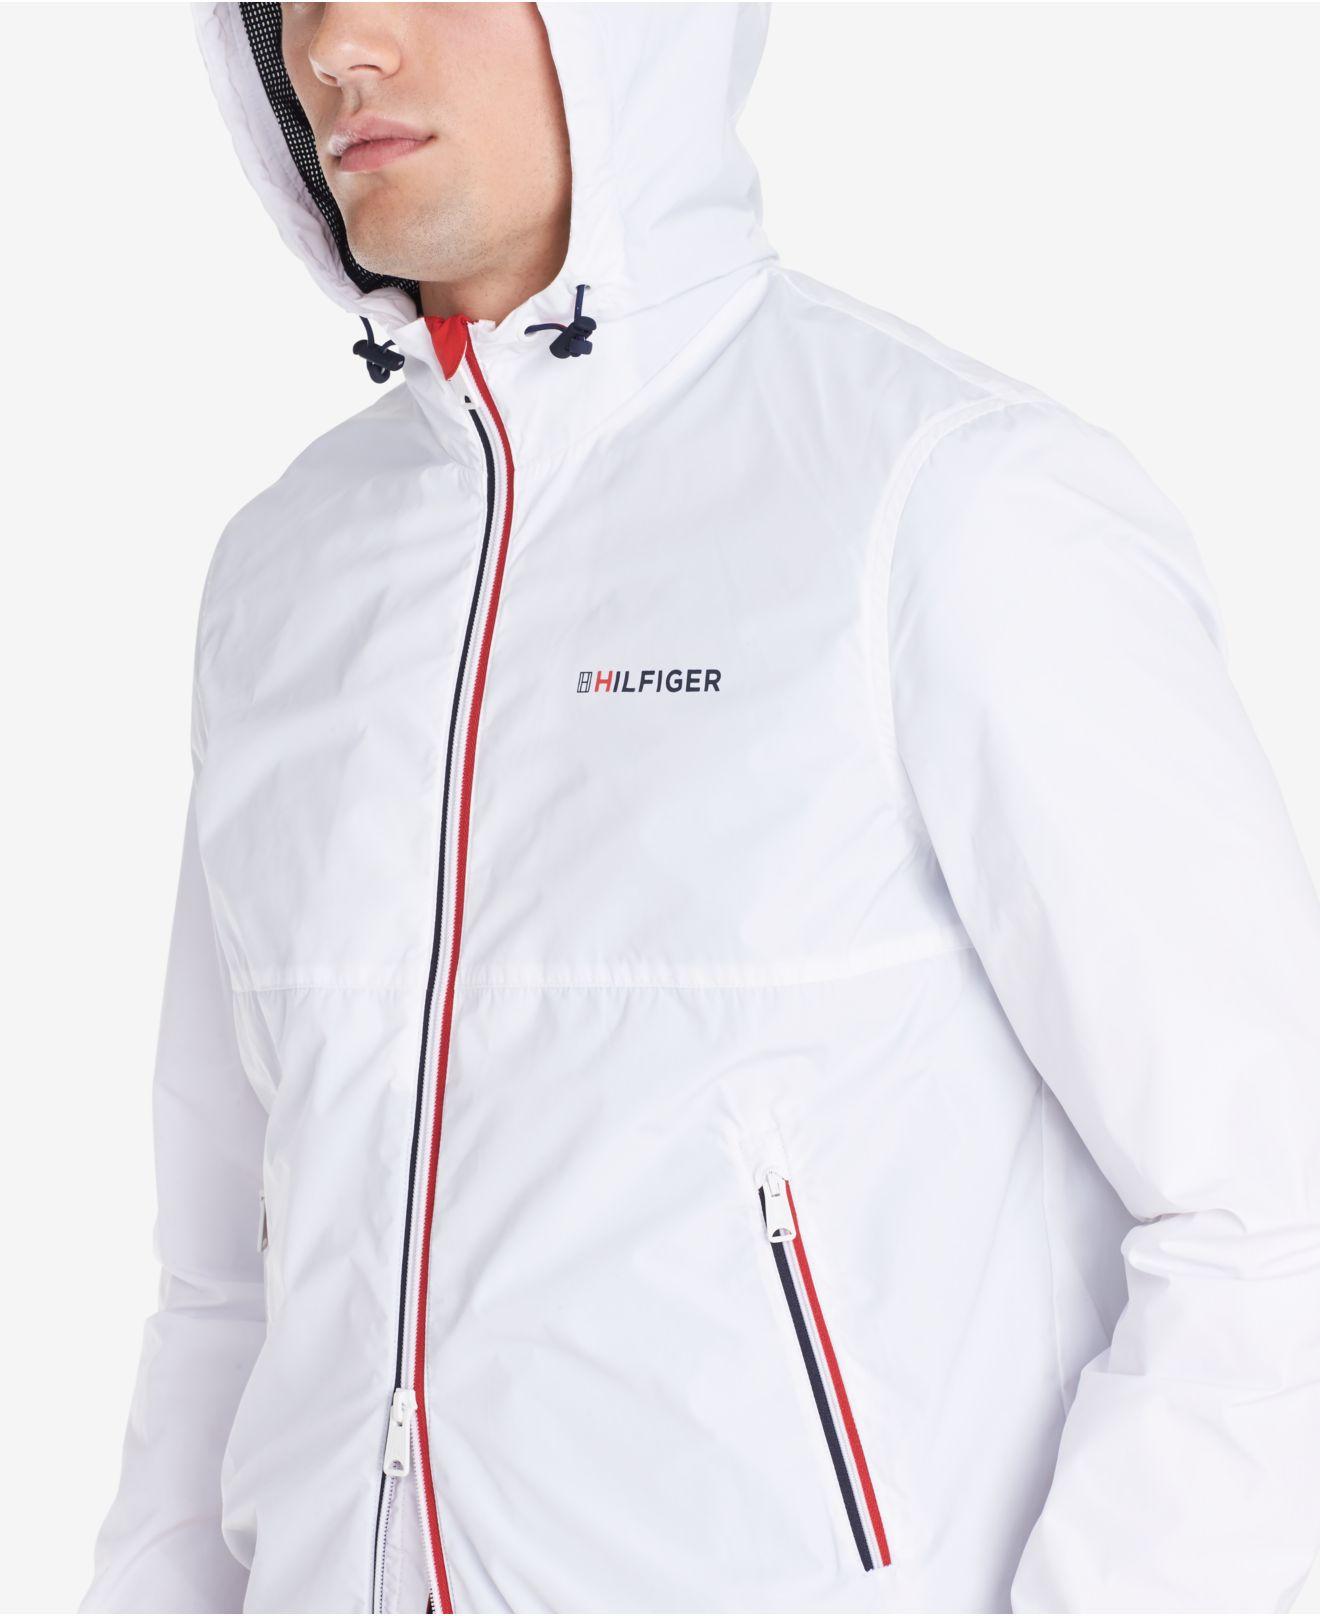 Tommy Hilfiger Park Full-zip Rain Jacket in White for Men - Lyst